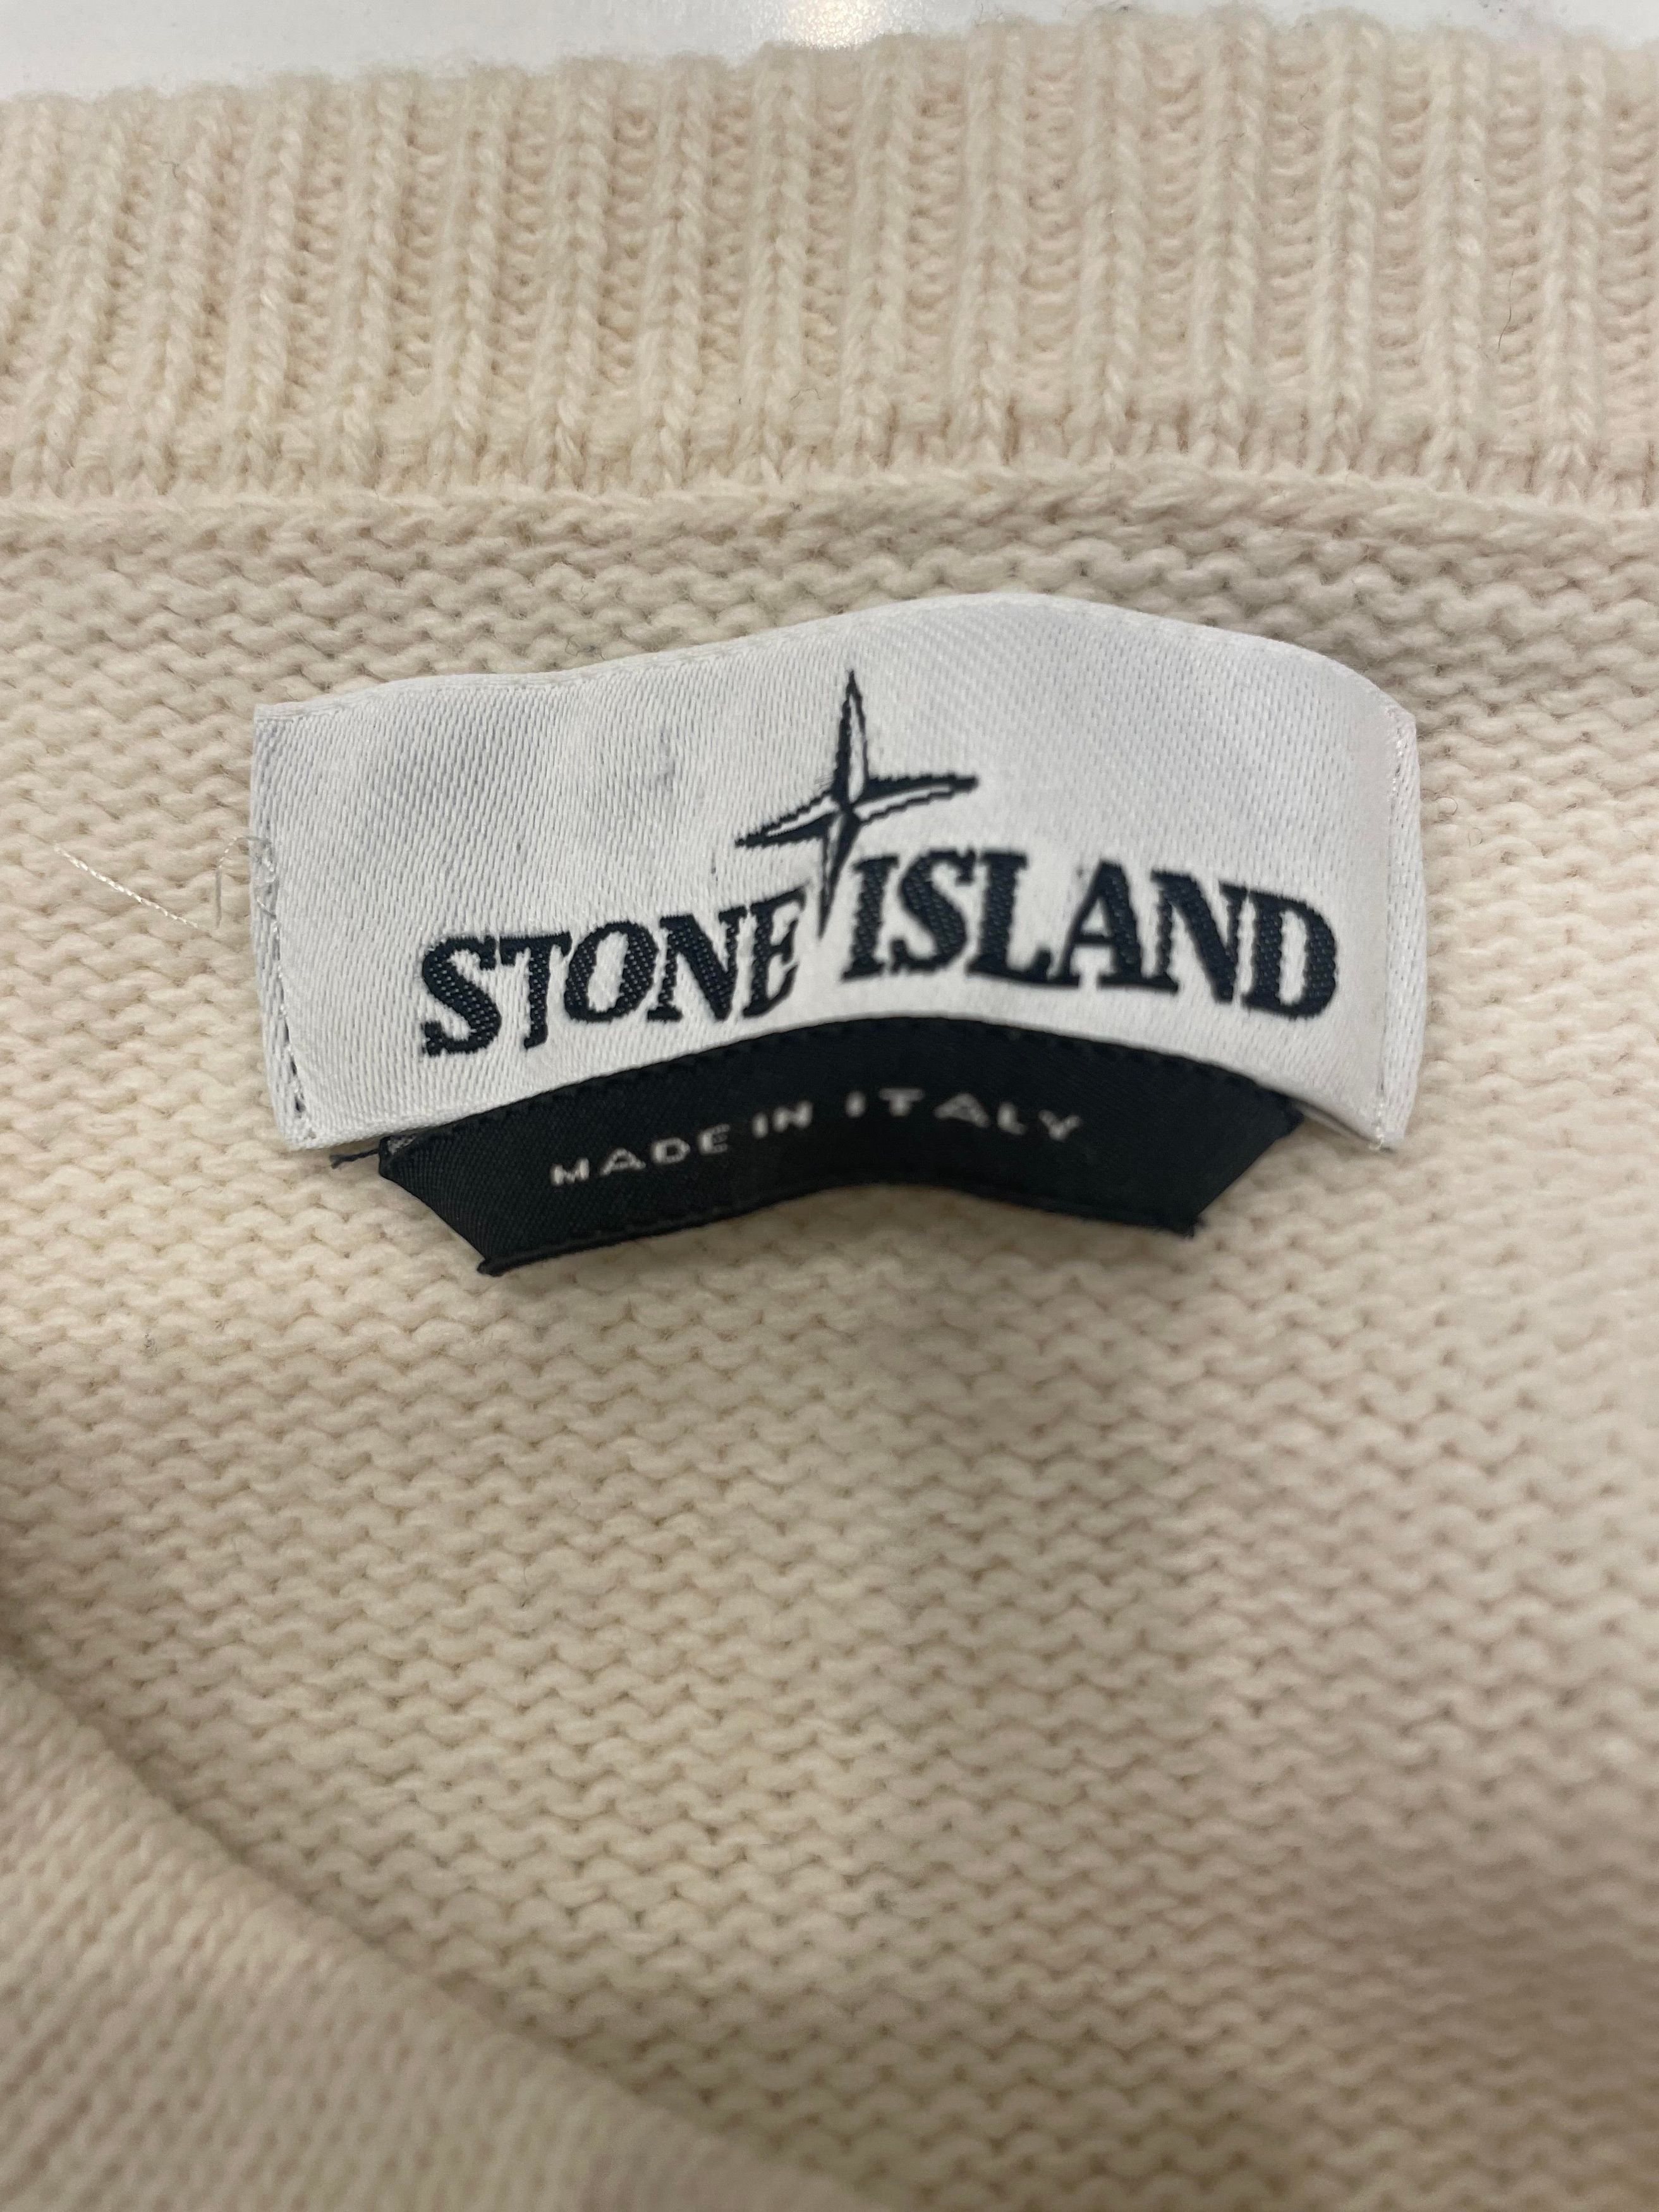 Stone Island Vintage Stone Island Knit Sweater Size US L / EU 52-54 / 3 - 4 Preview